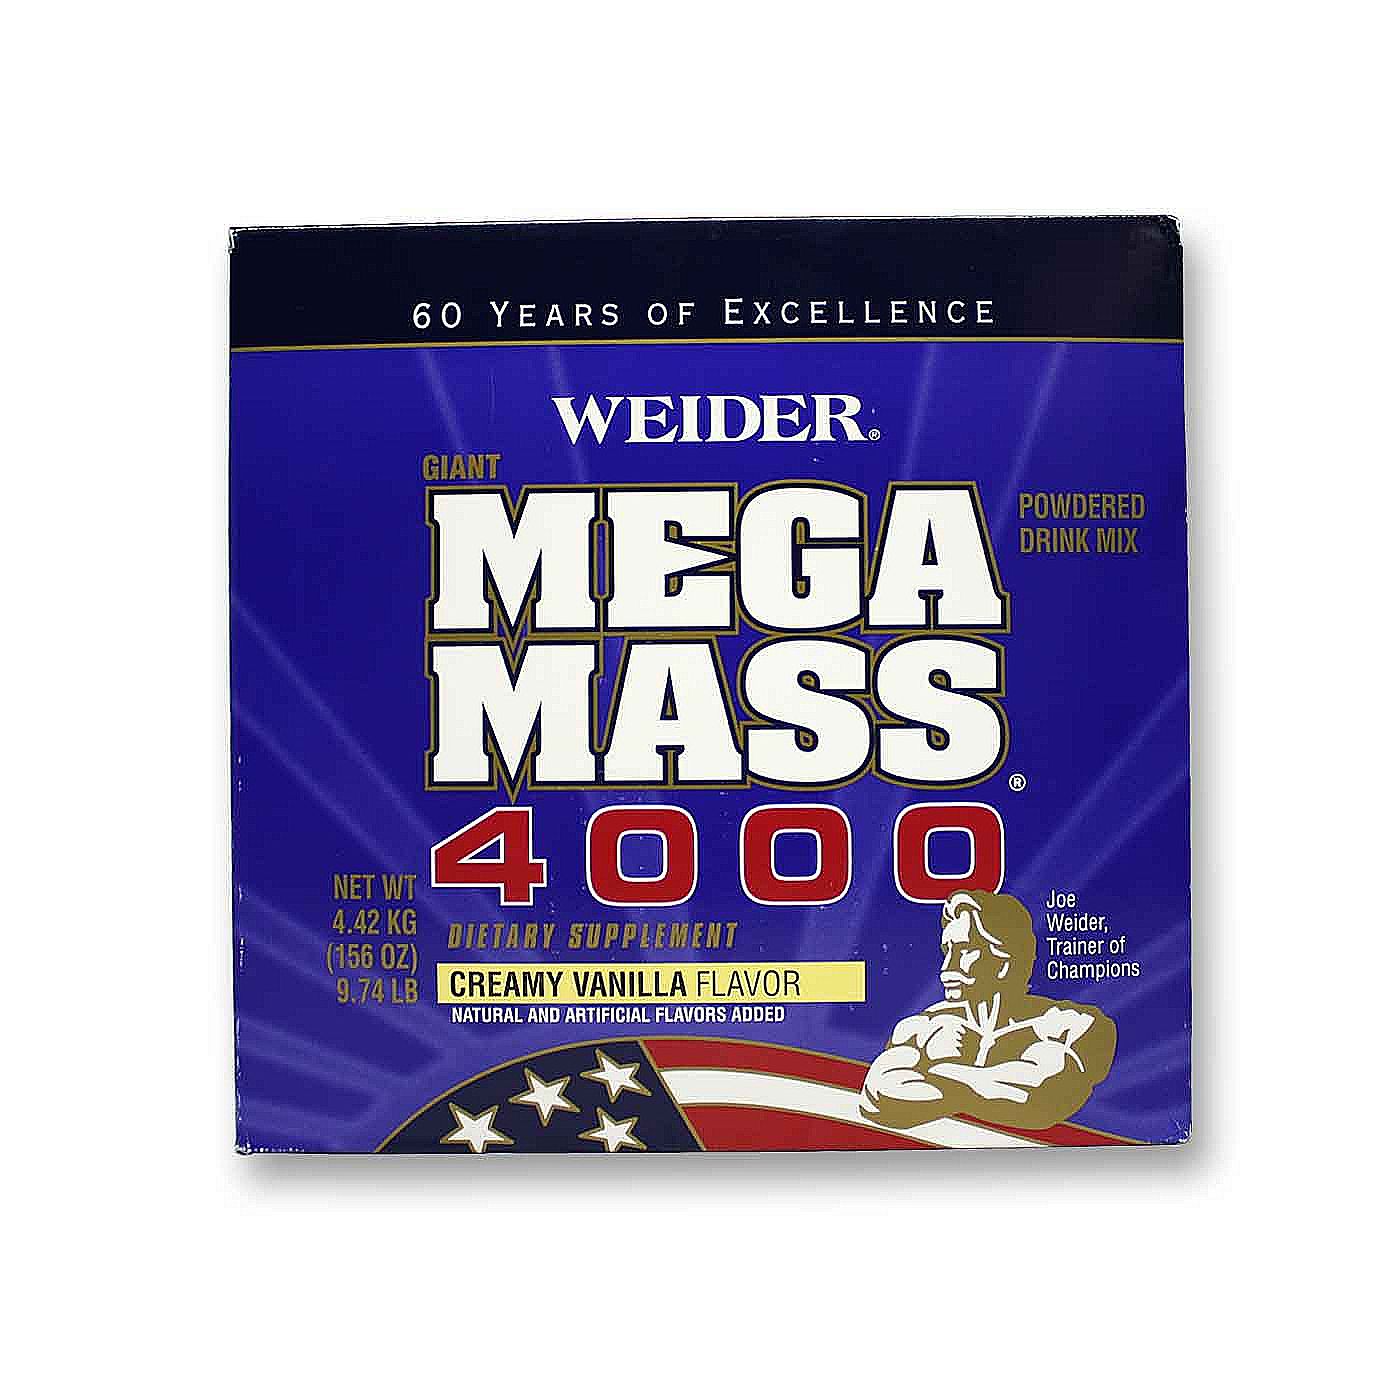 Gainer Giant Mega Mass 4000 - Weider